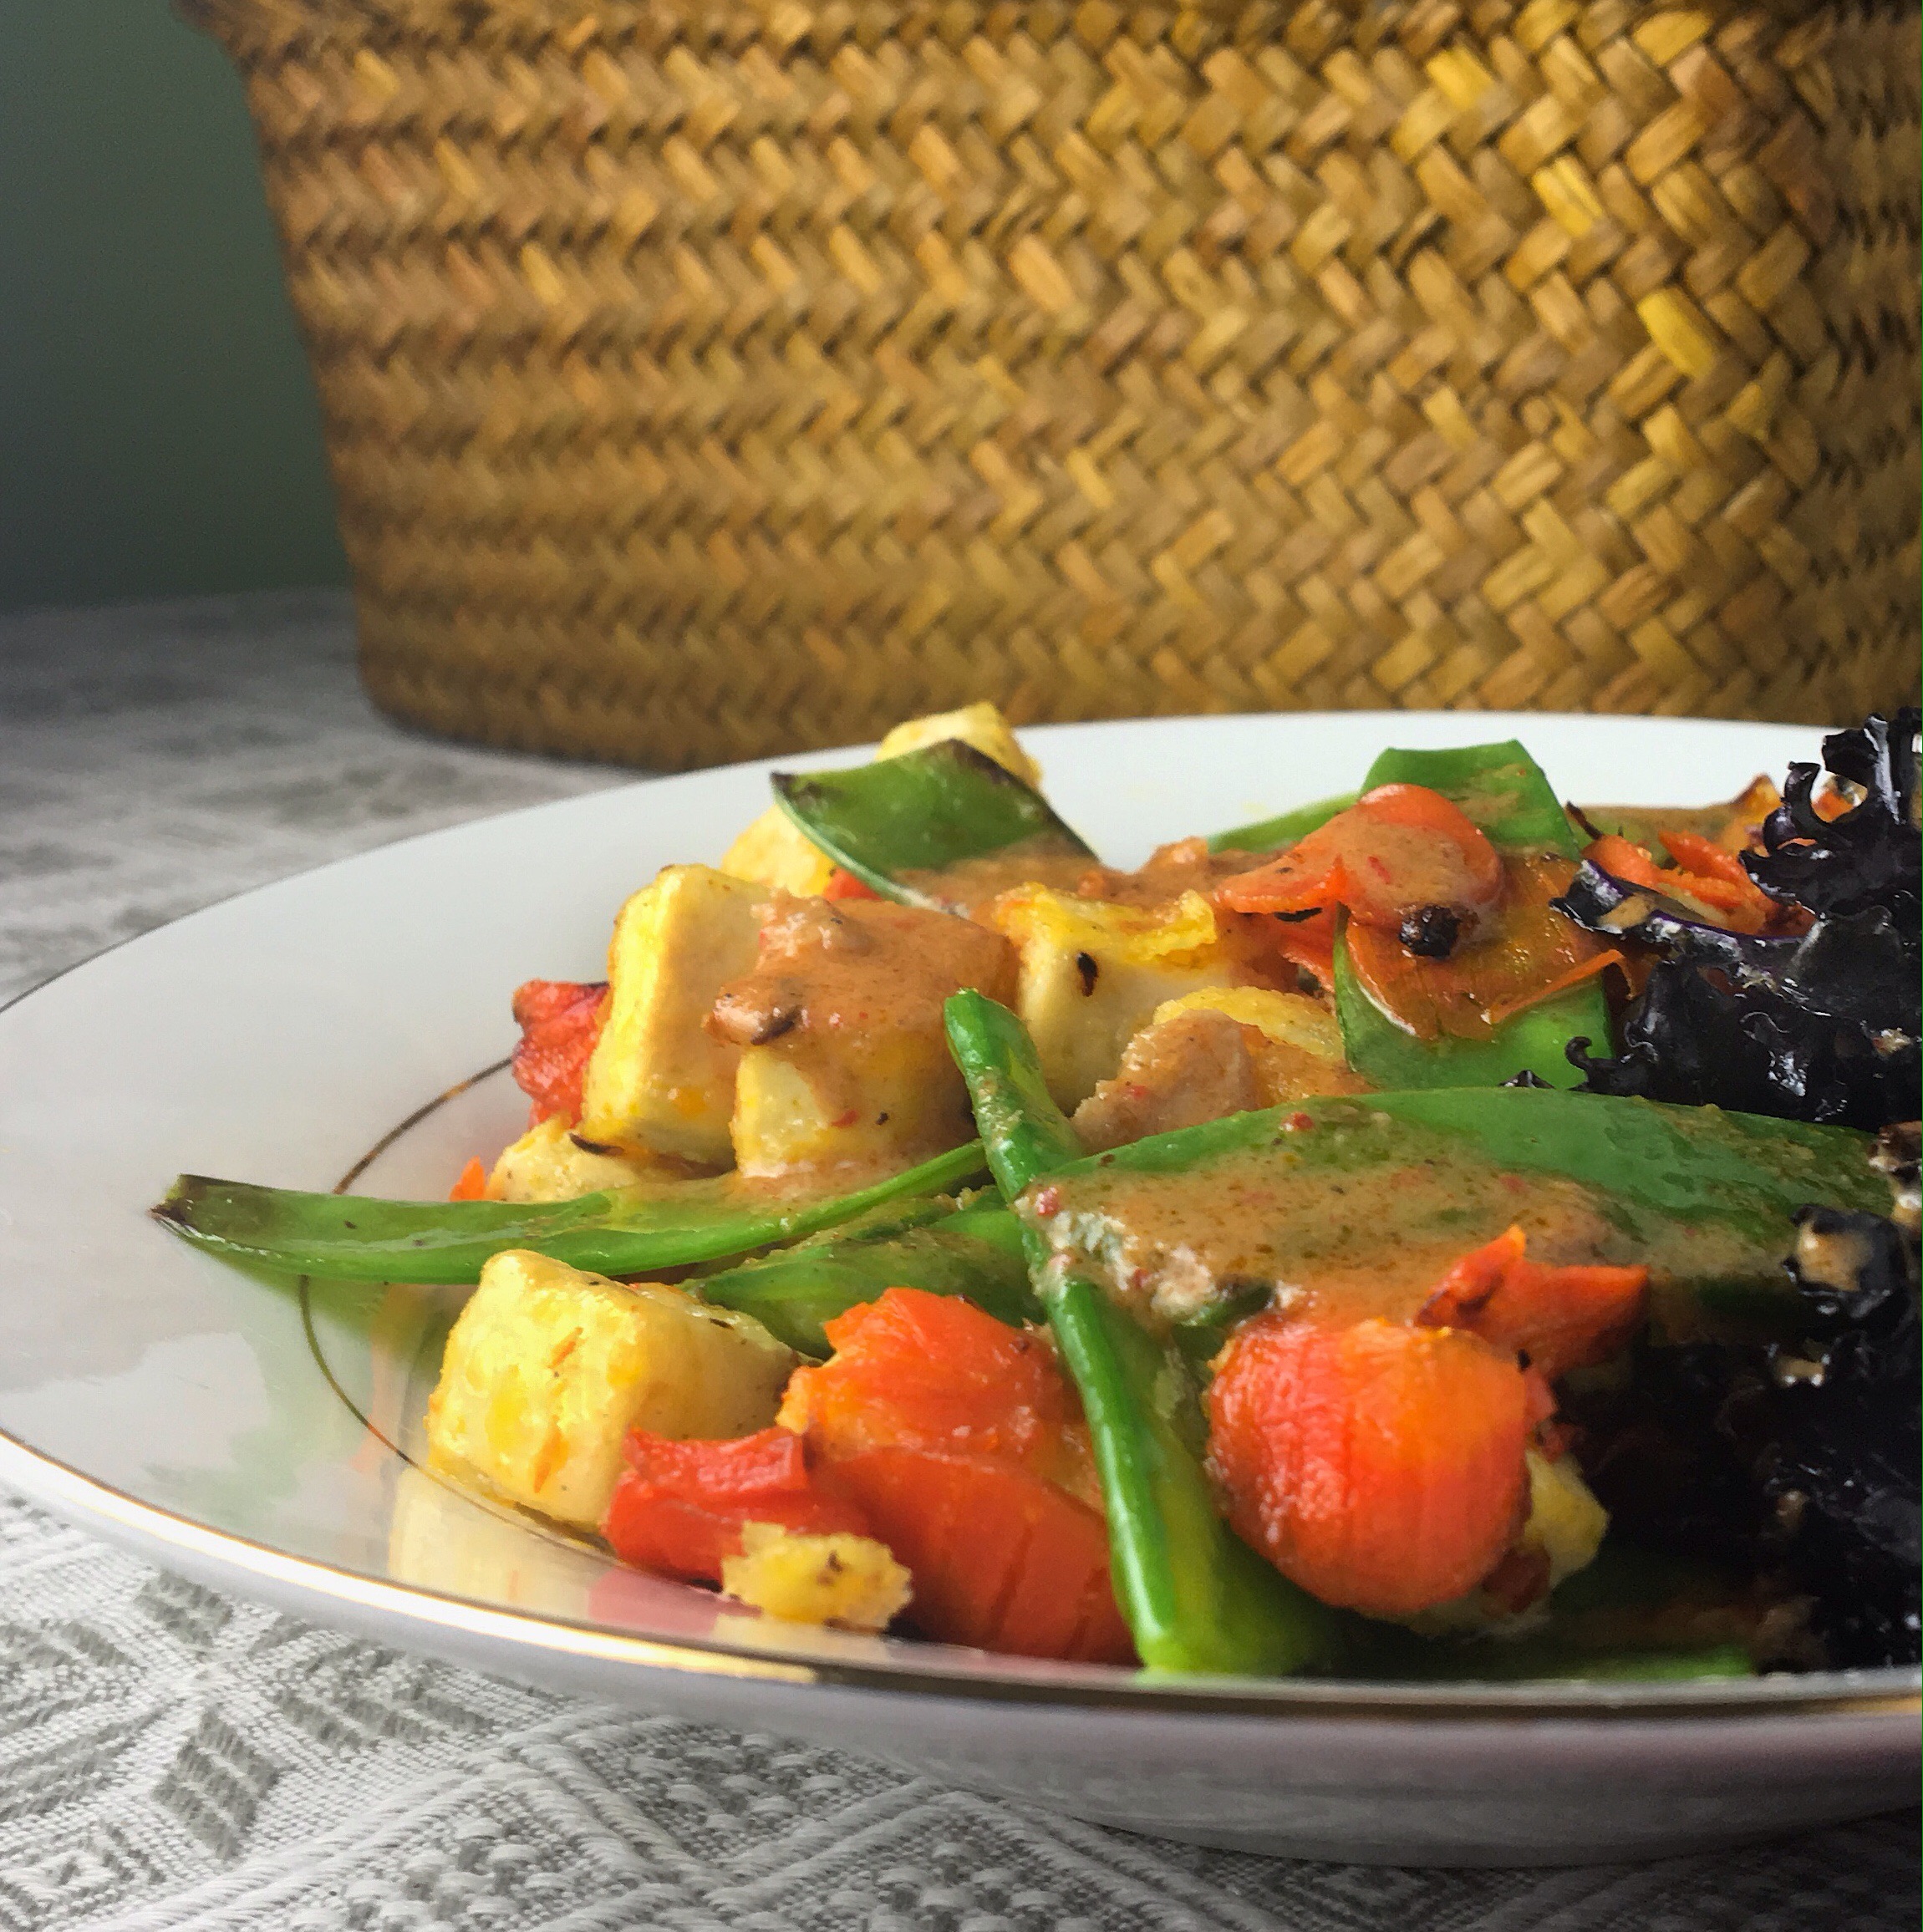 panang curry with tofu and veggies | asavoryplate.com